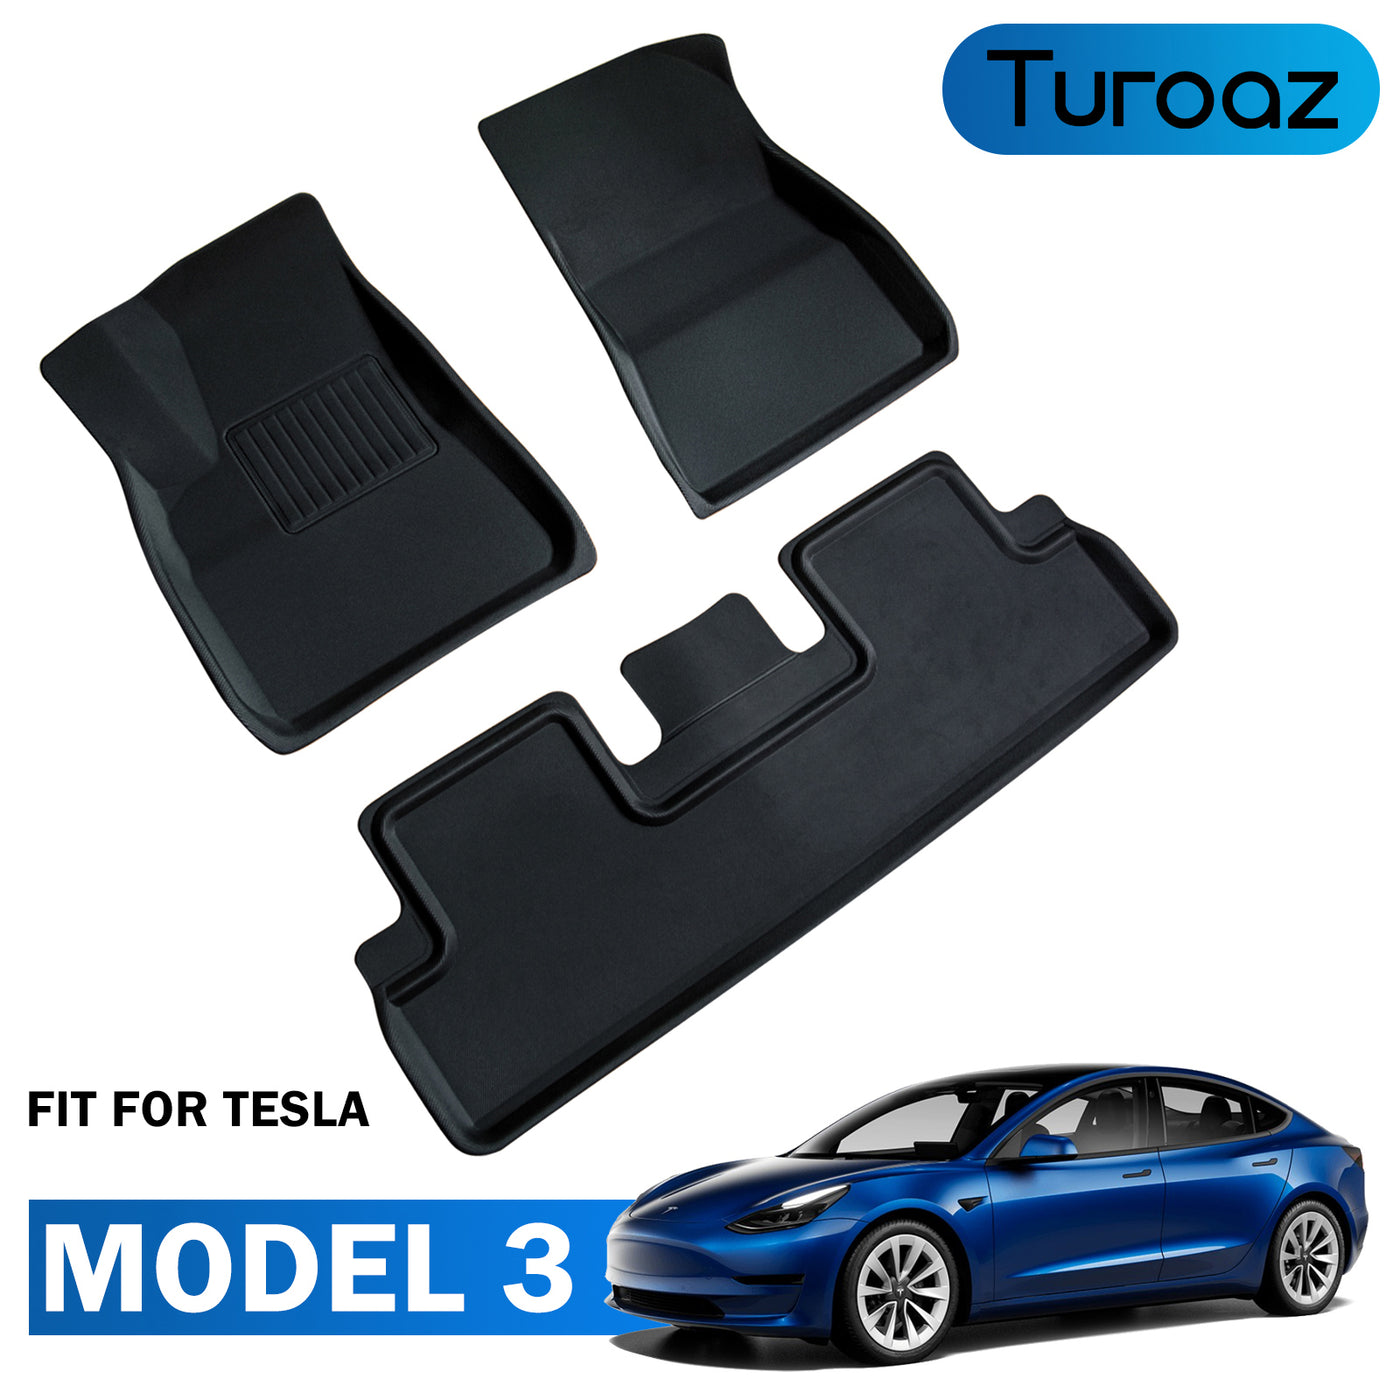 Turoaz All Weather Floor Mats Fit For Tesla Model 3